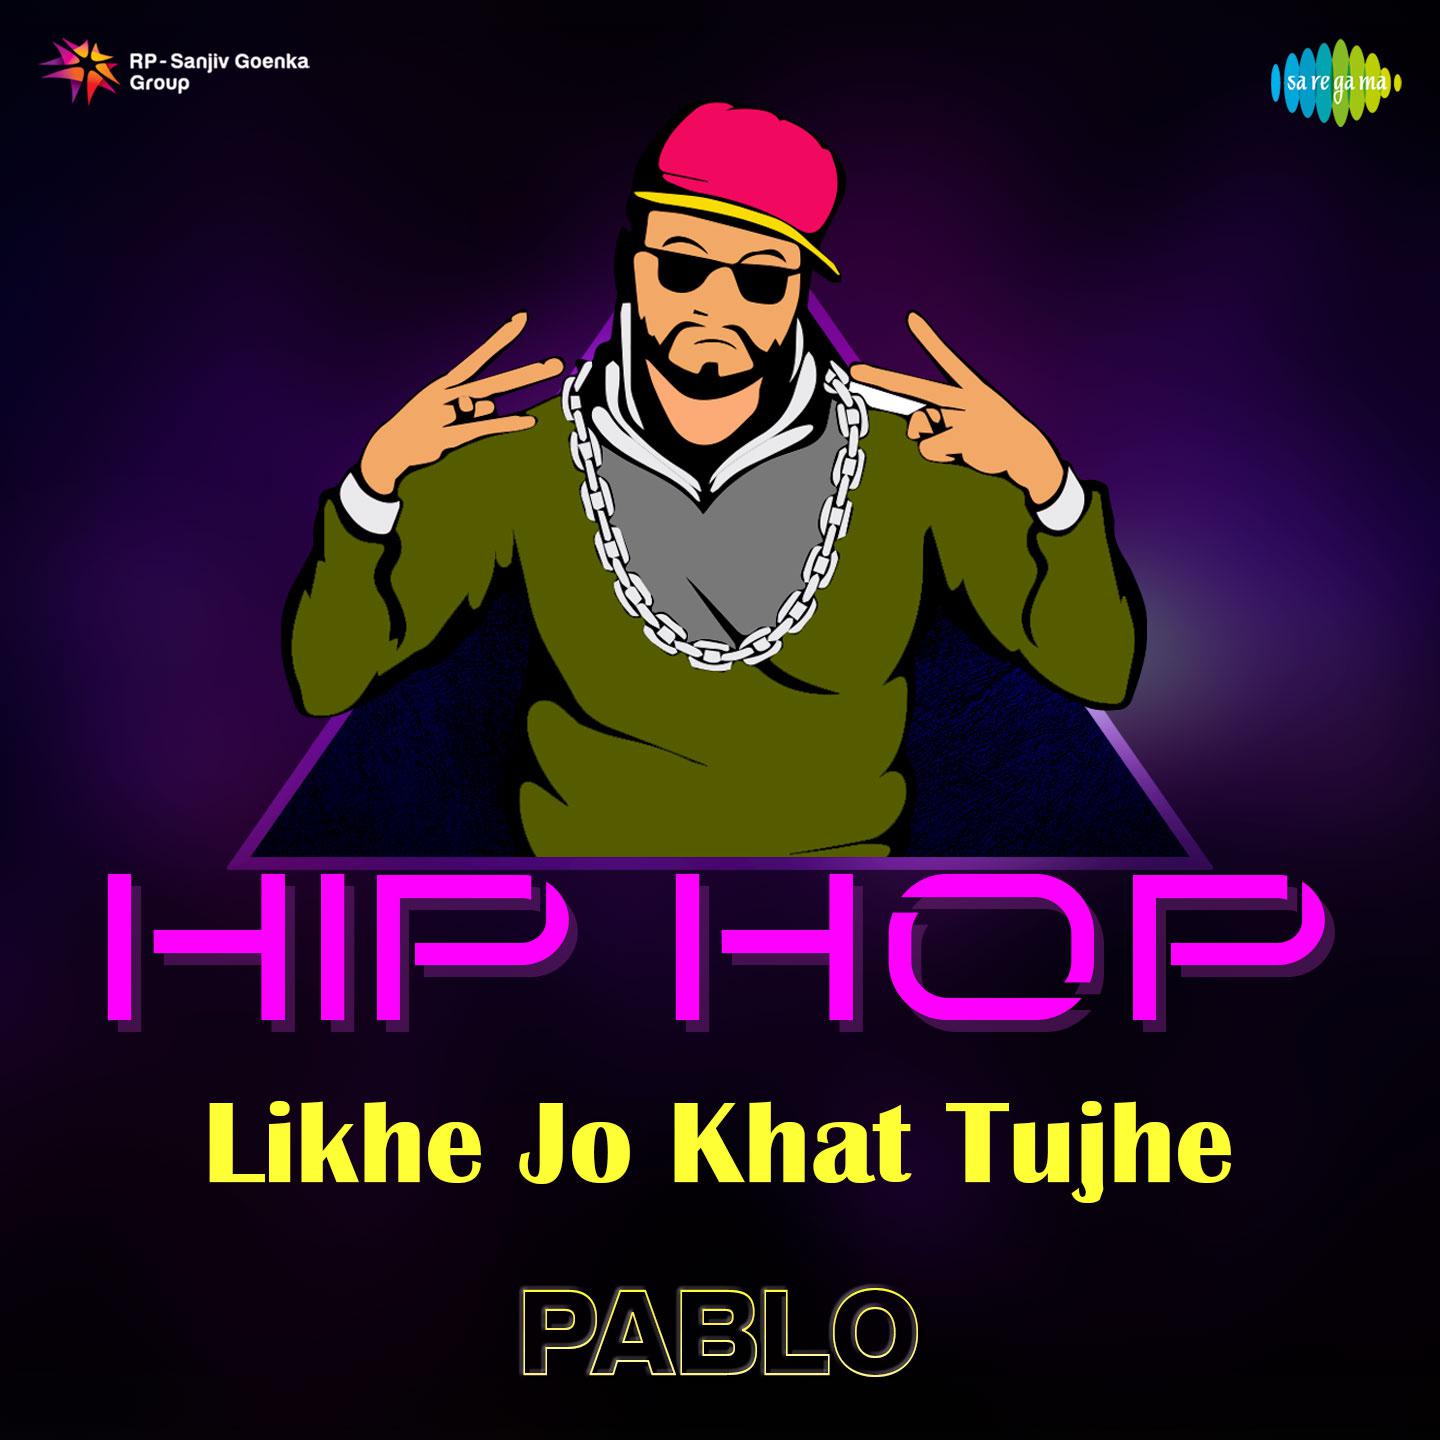 PABLO - Likhe Jo Khat Tujhe - Hip Hop